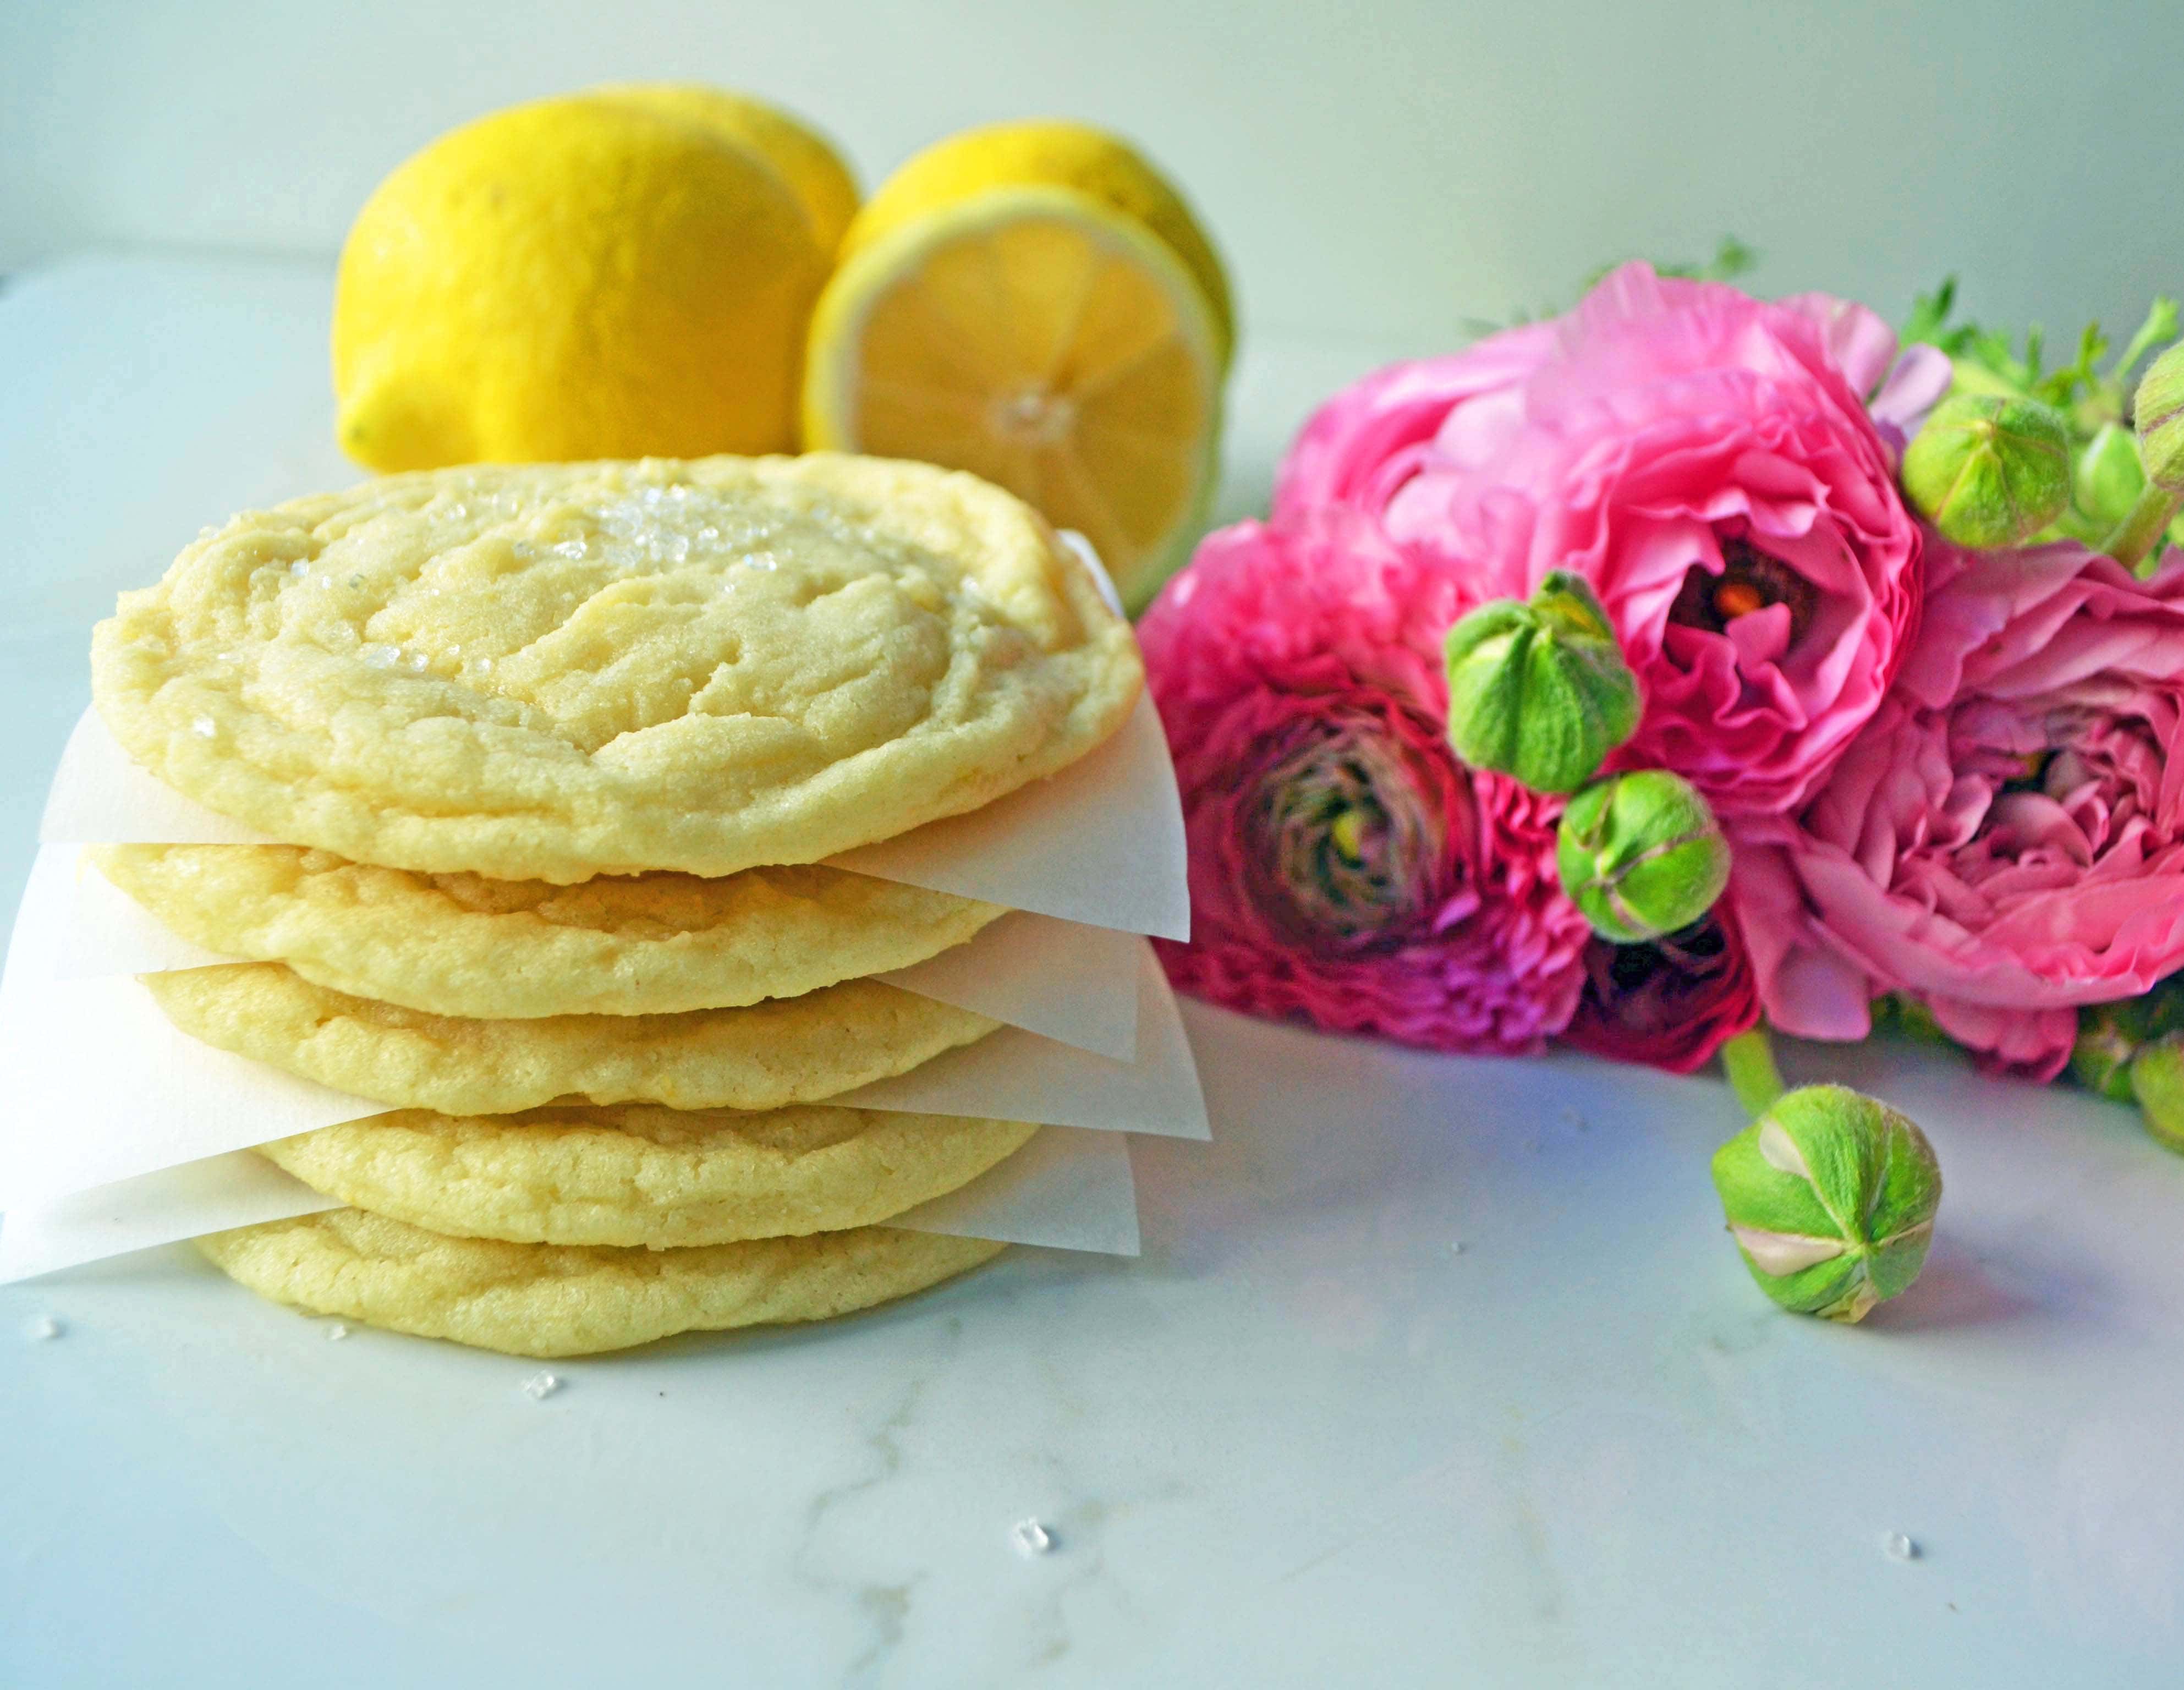 Soft chewy lemon sugar cookies. The perfect sugar cookie with lemon juice and zest to give it that perfect lemon flavor. A popular lemon cookie recipe! www.modernhoney.com #lemoncookies #lemon #lemondessert